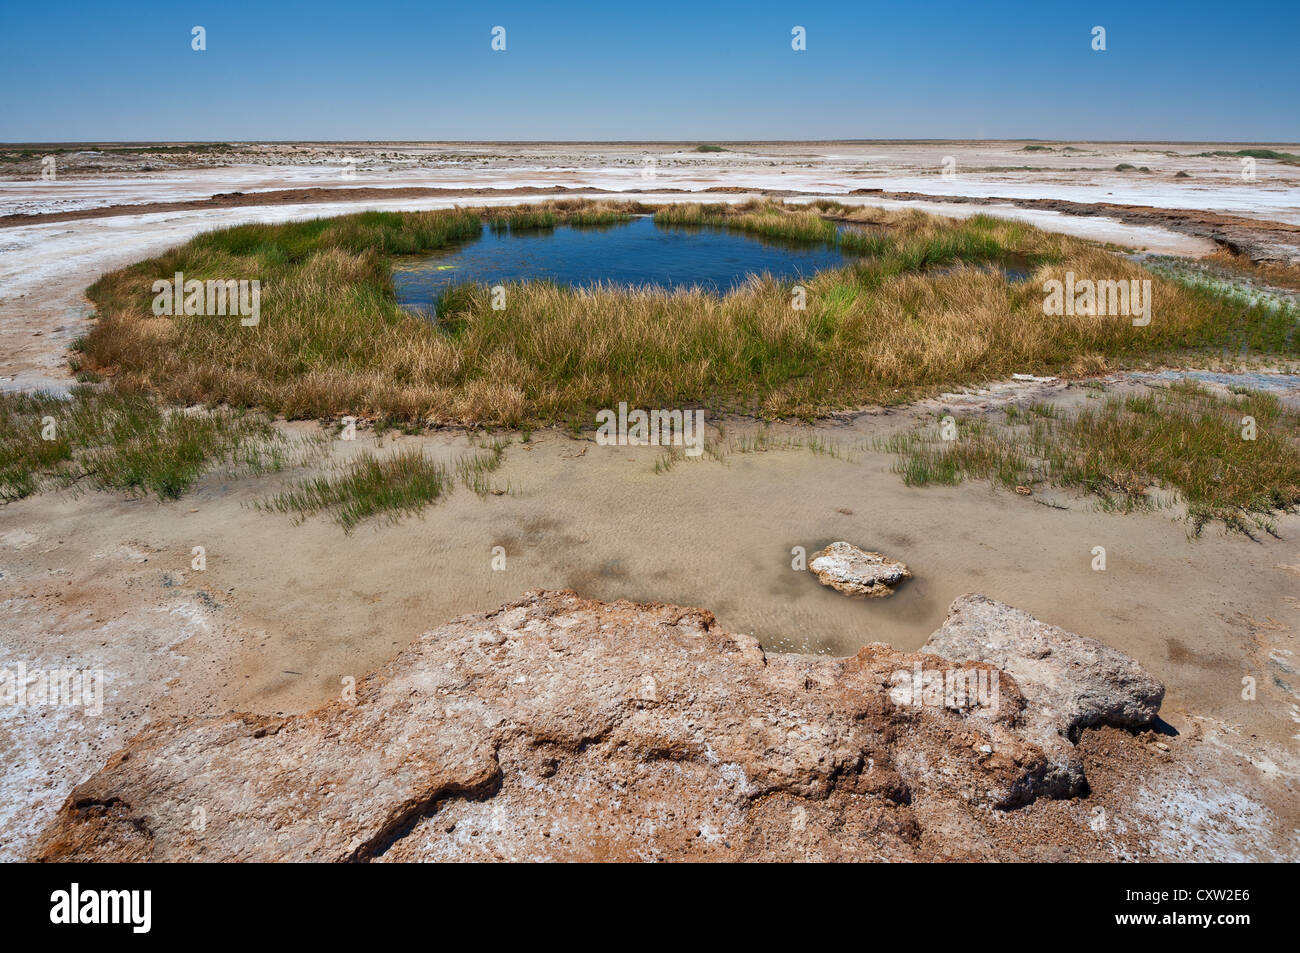 Mound Springs in South Australia's desert. Stock Photo